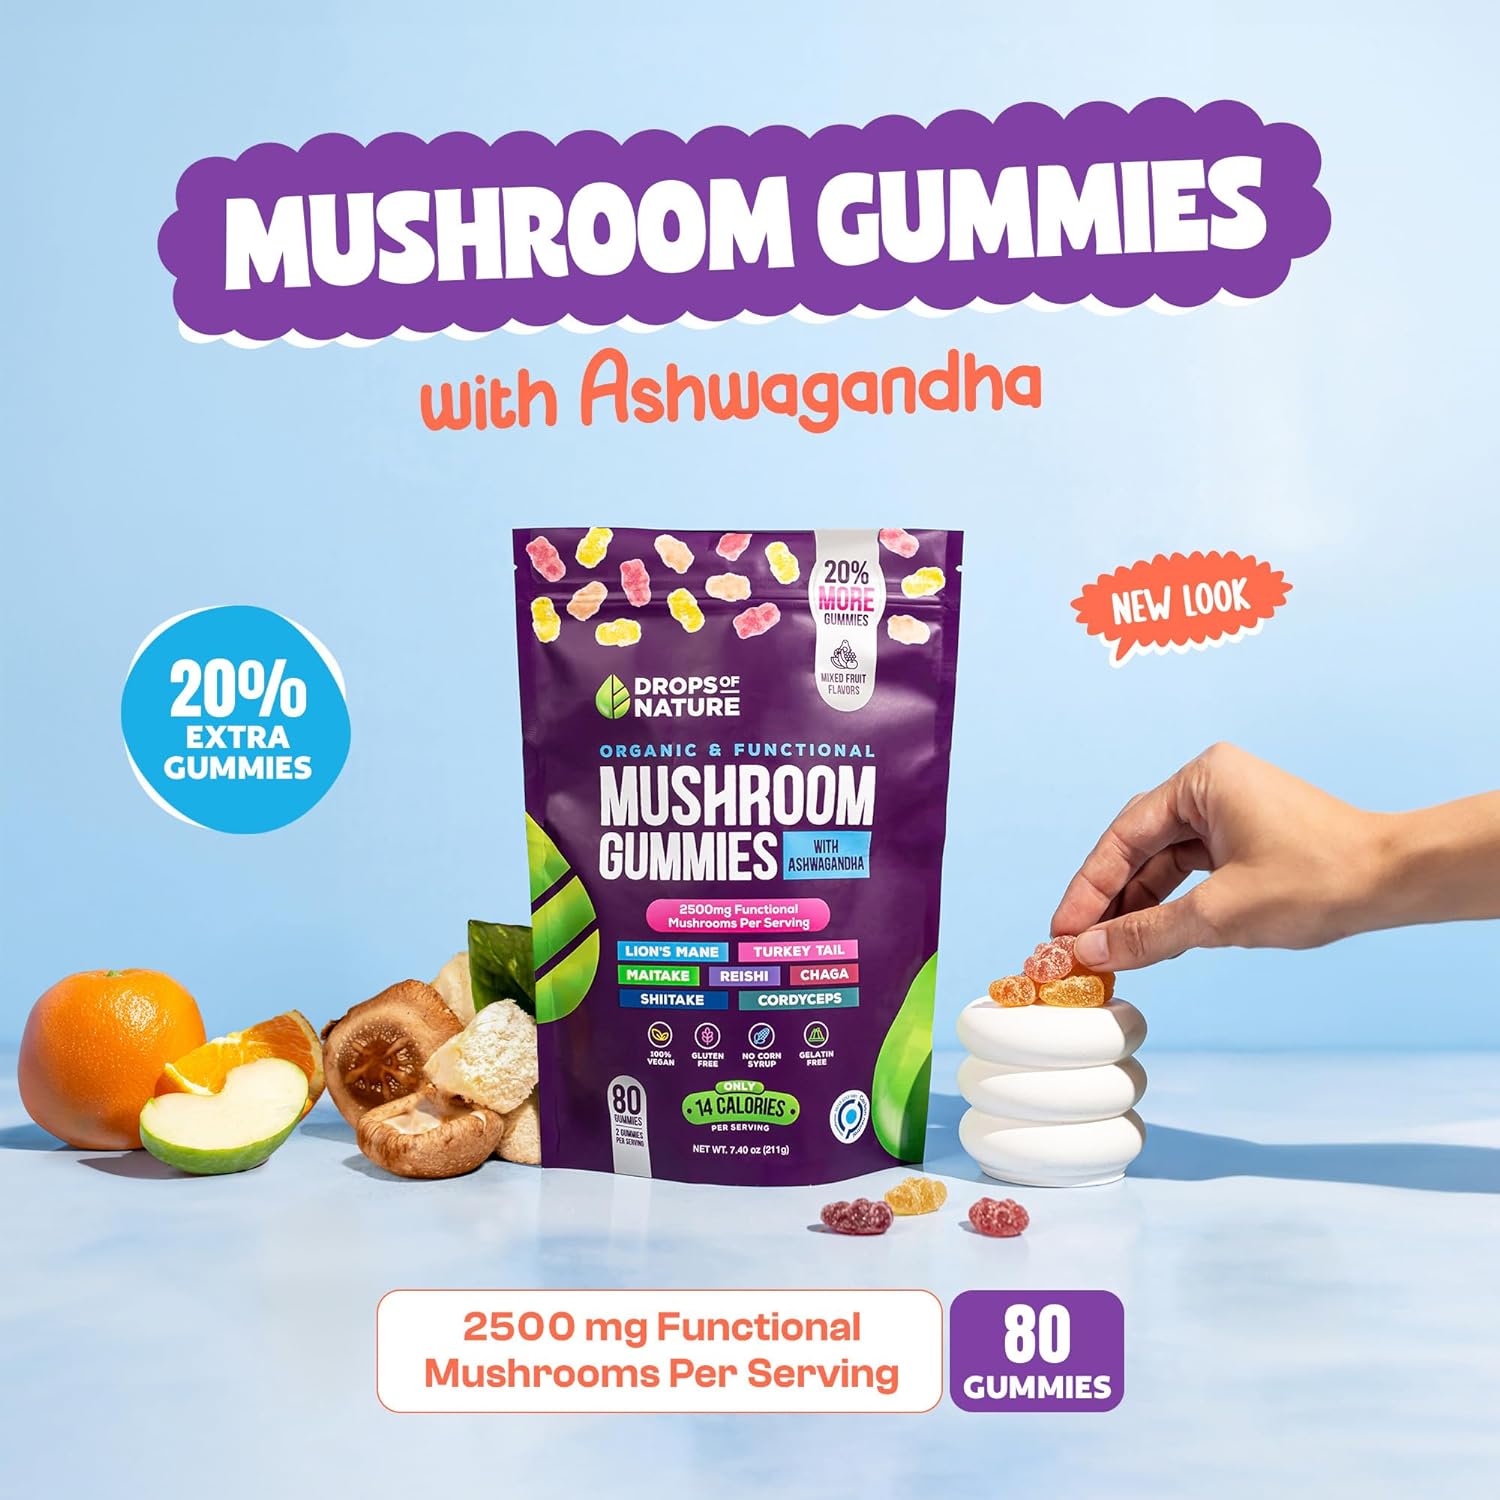 Ashwagandha  Lions Mane Supplement Gummies - Comprehensive Mushroom Supplement For Cognitive  Immune Support, Vegan Blend With Reishi, Cordyceps - Low Carb, 80 Organic Mushroom Gummies